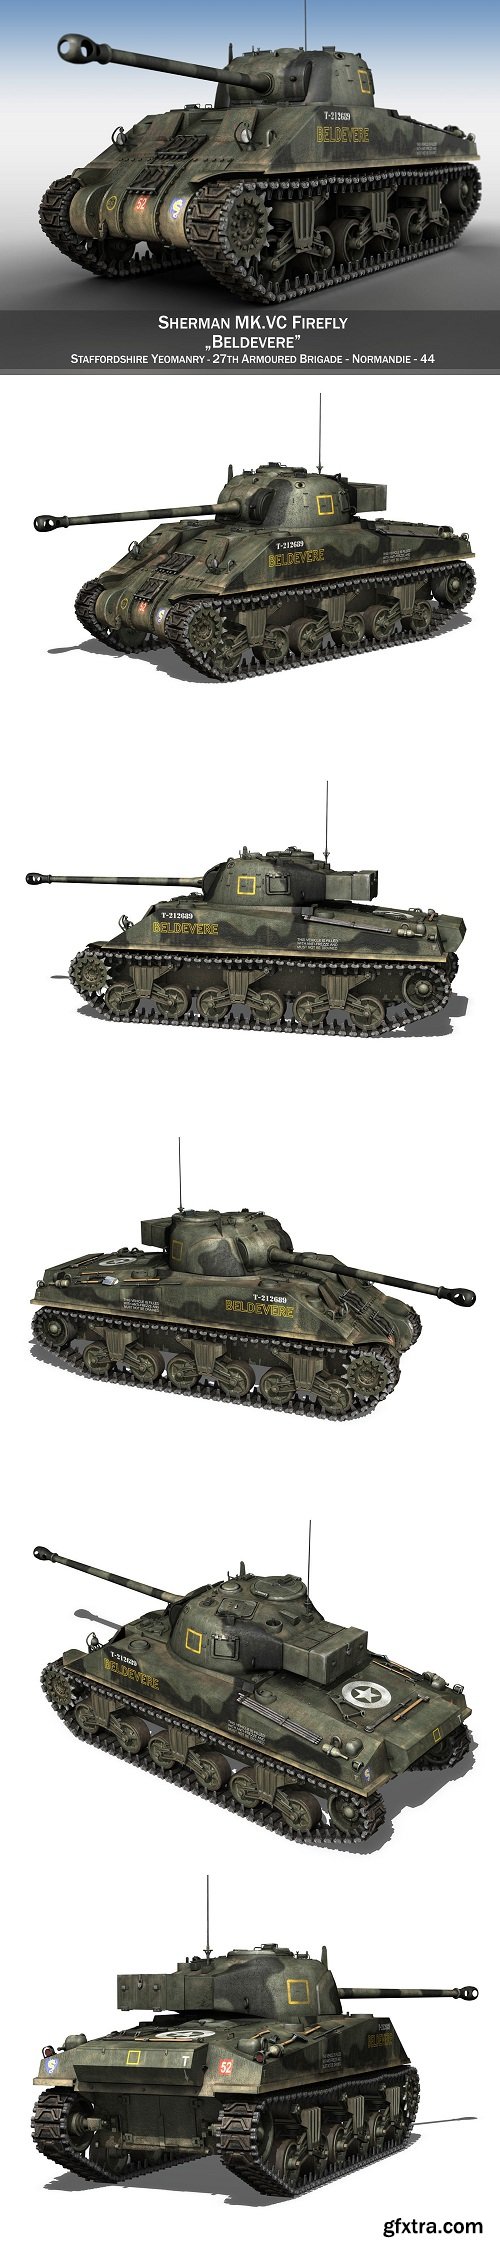 M4 Sherman MK VC Firefly - Beldevere 3D model